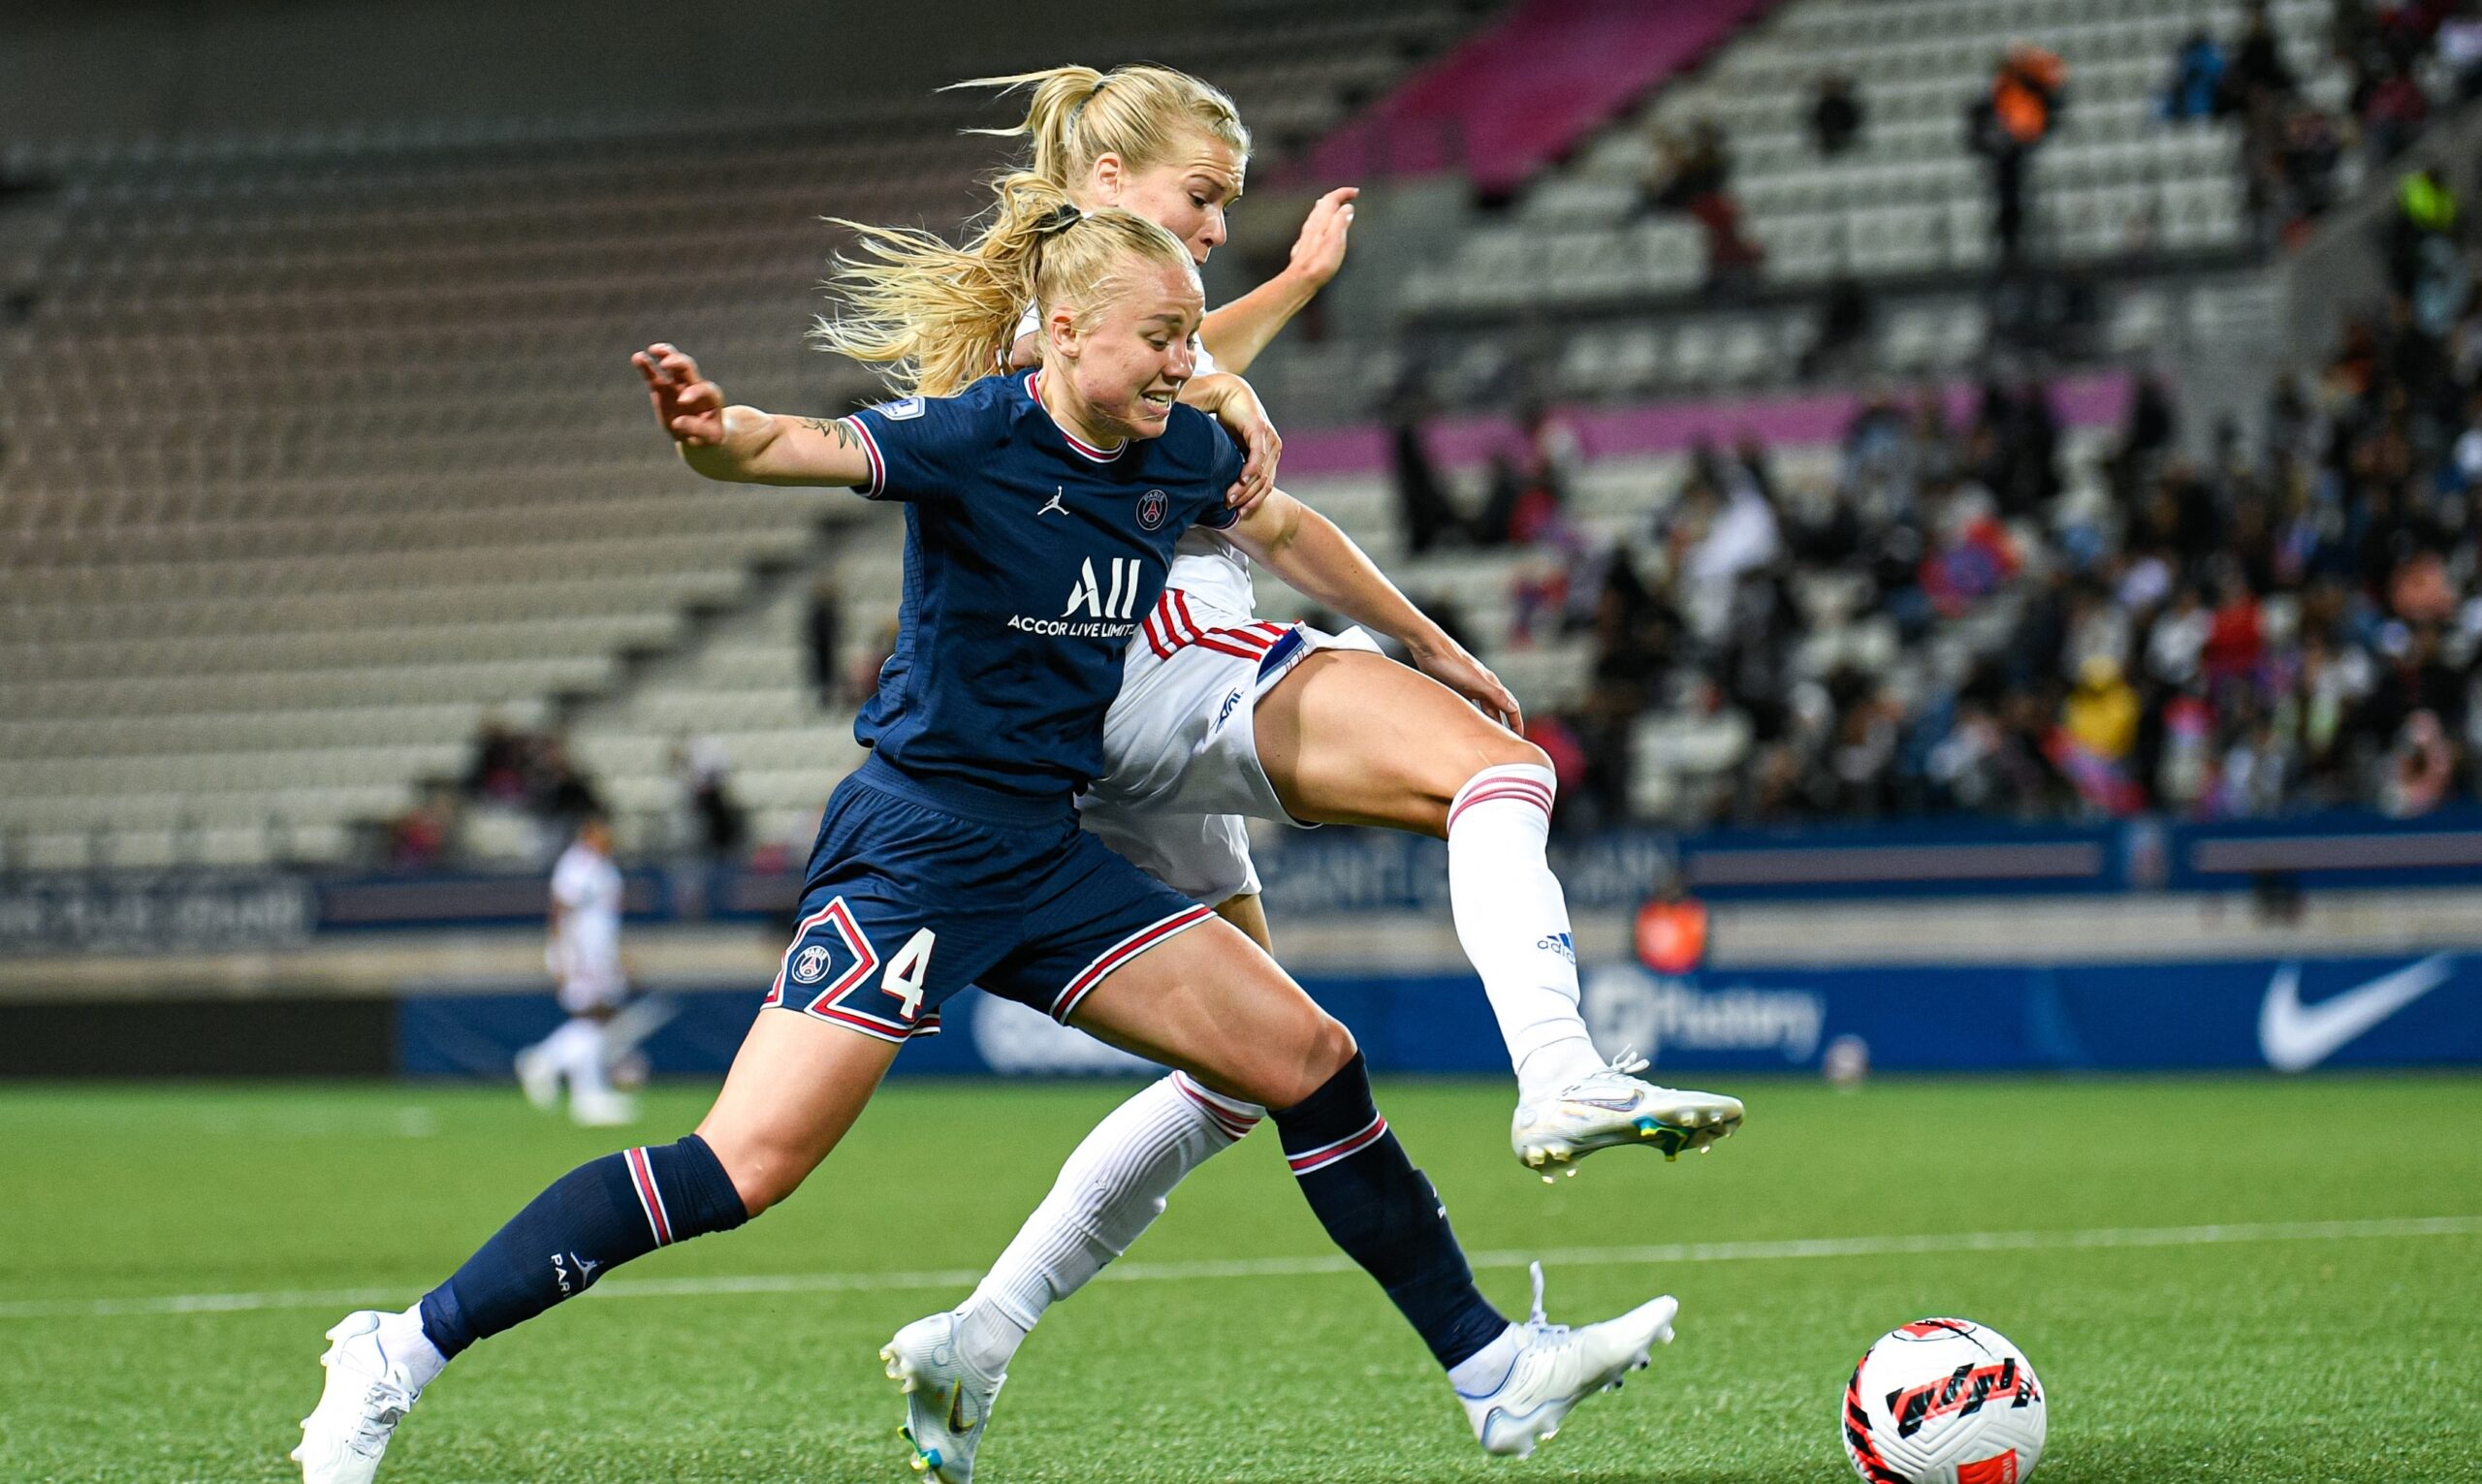 Olympique Lyon - PSG, finala Cupei Franței la fotbal feminin